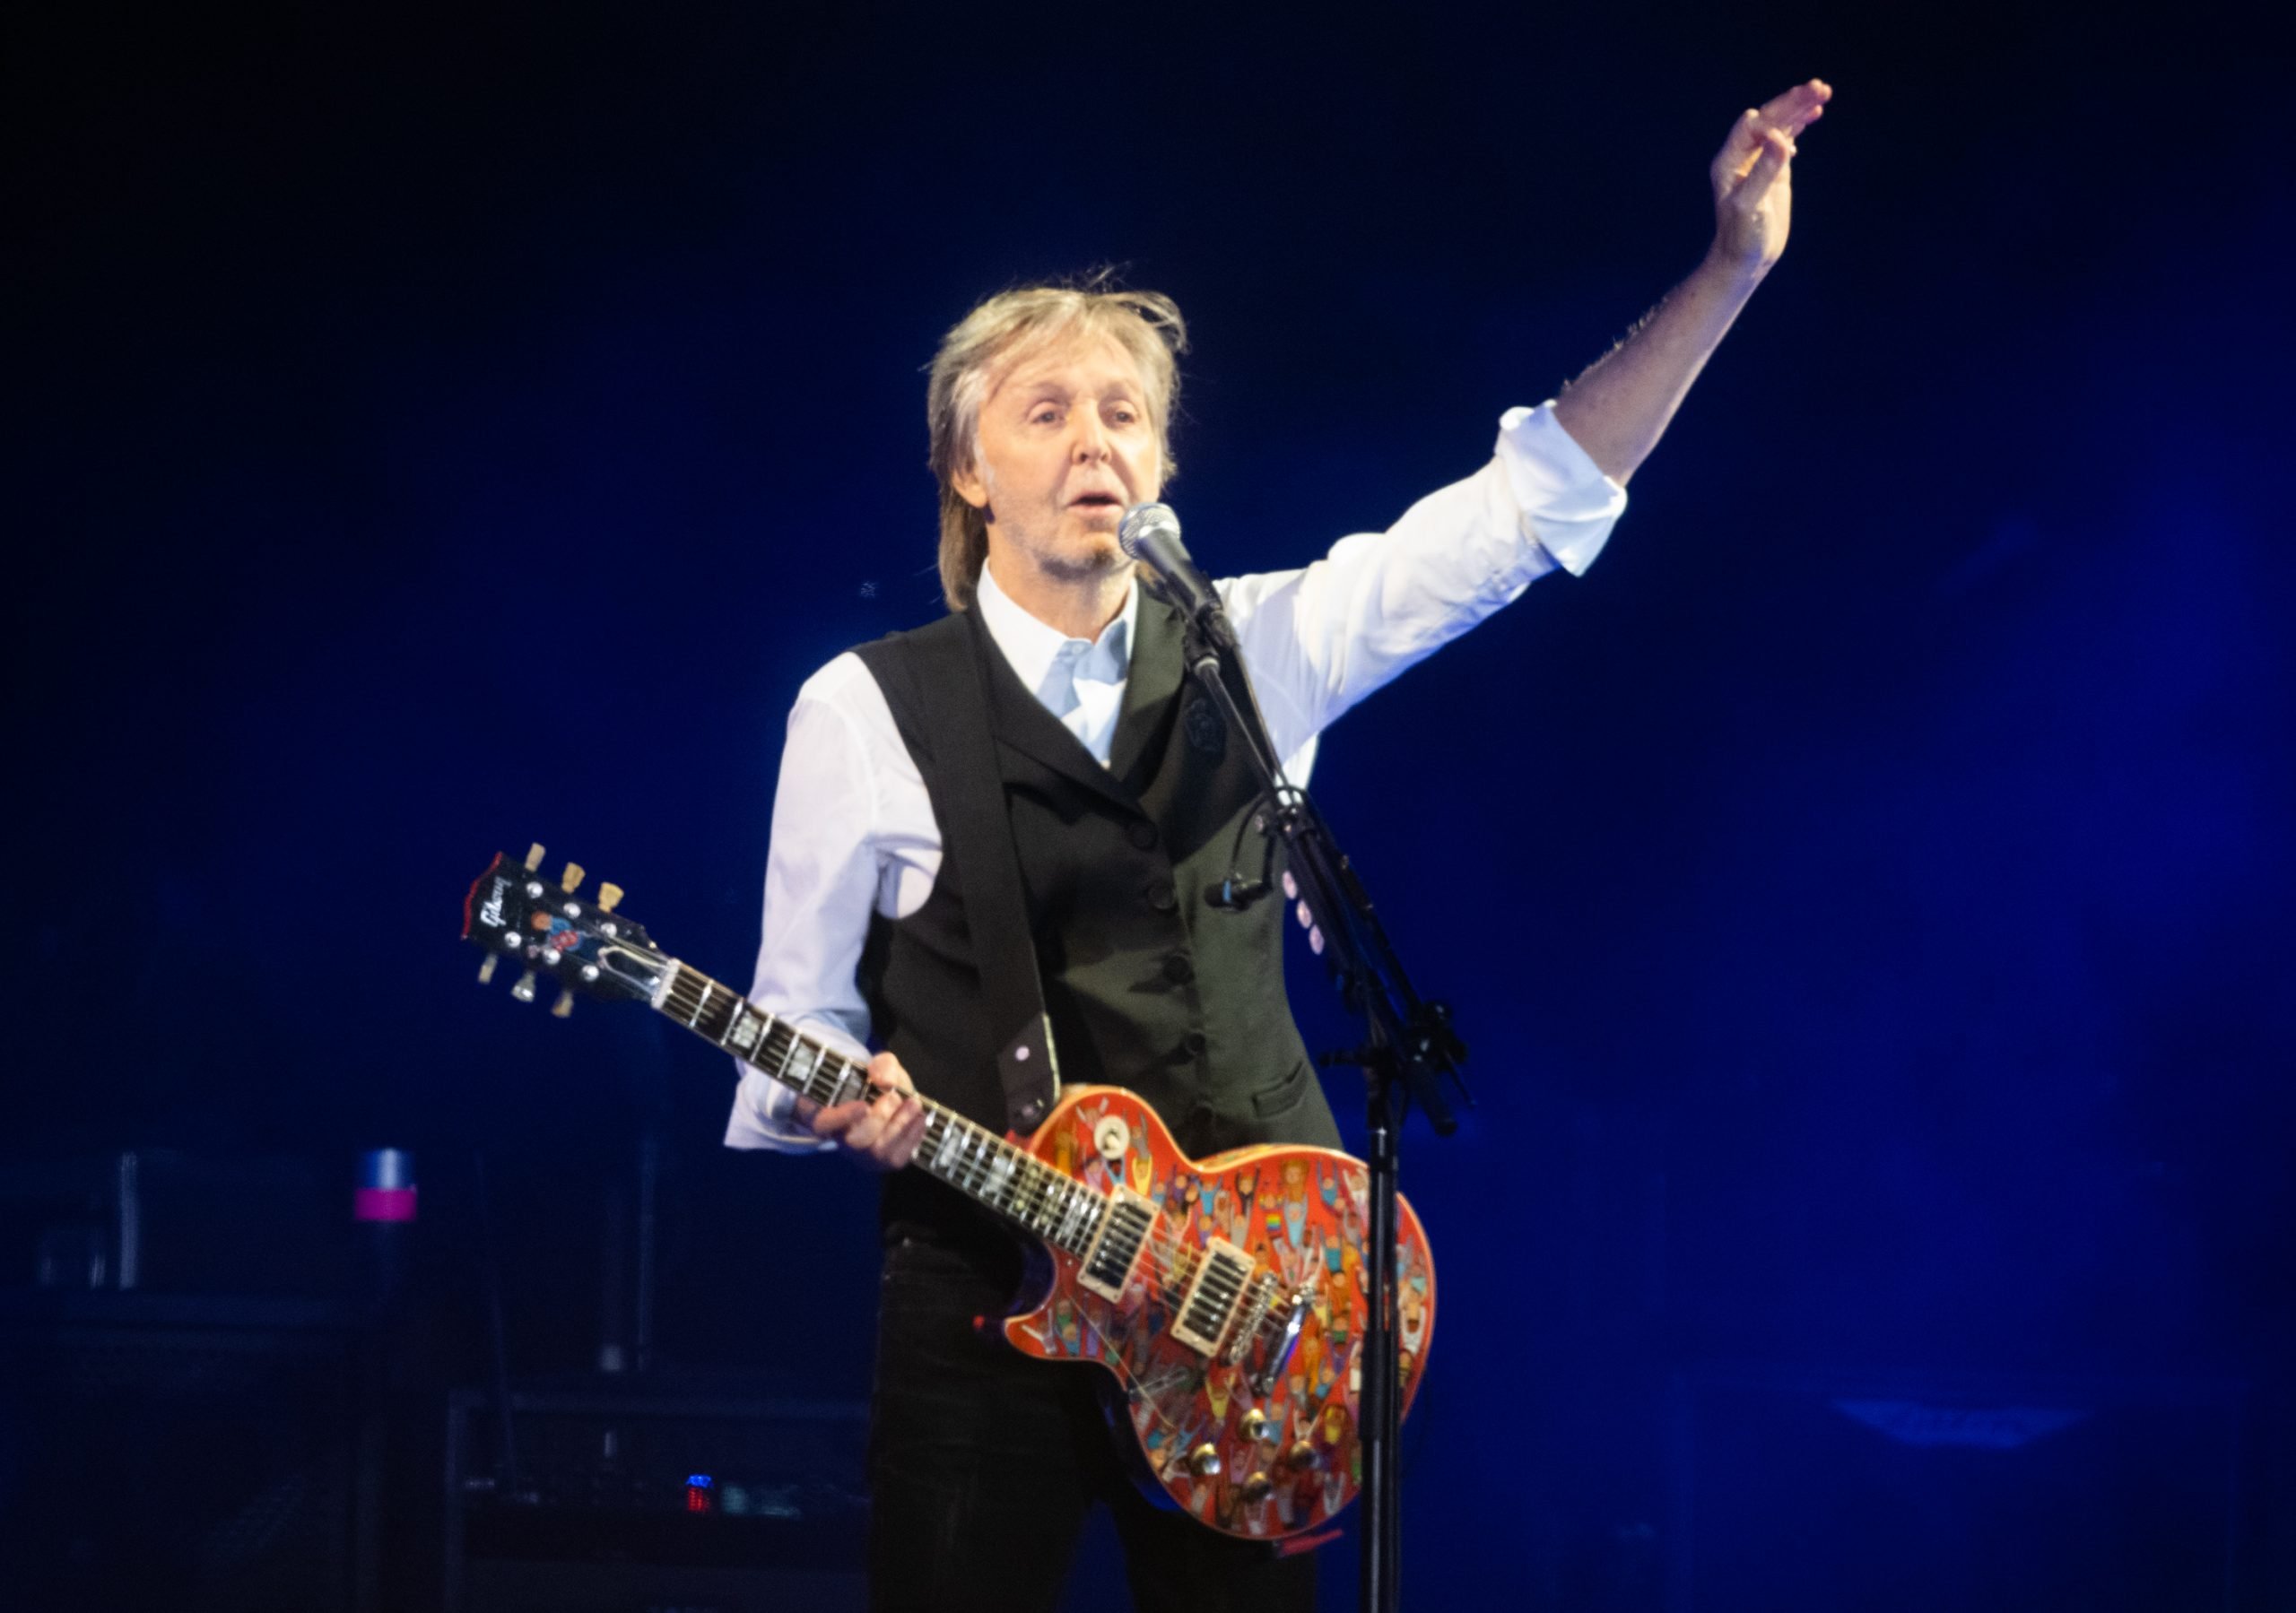 Paul McCartney performs at Glastonbury Festival in June 2022